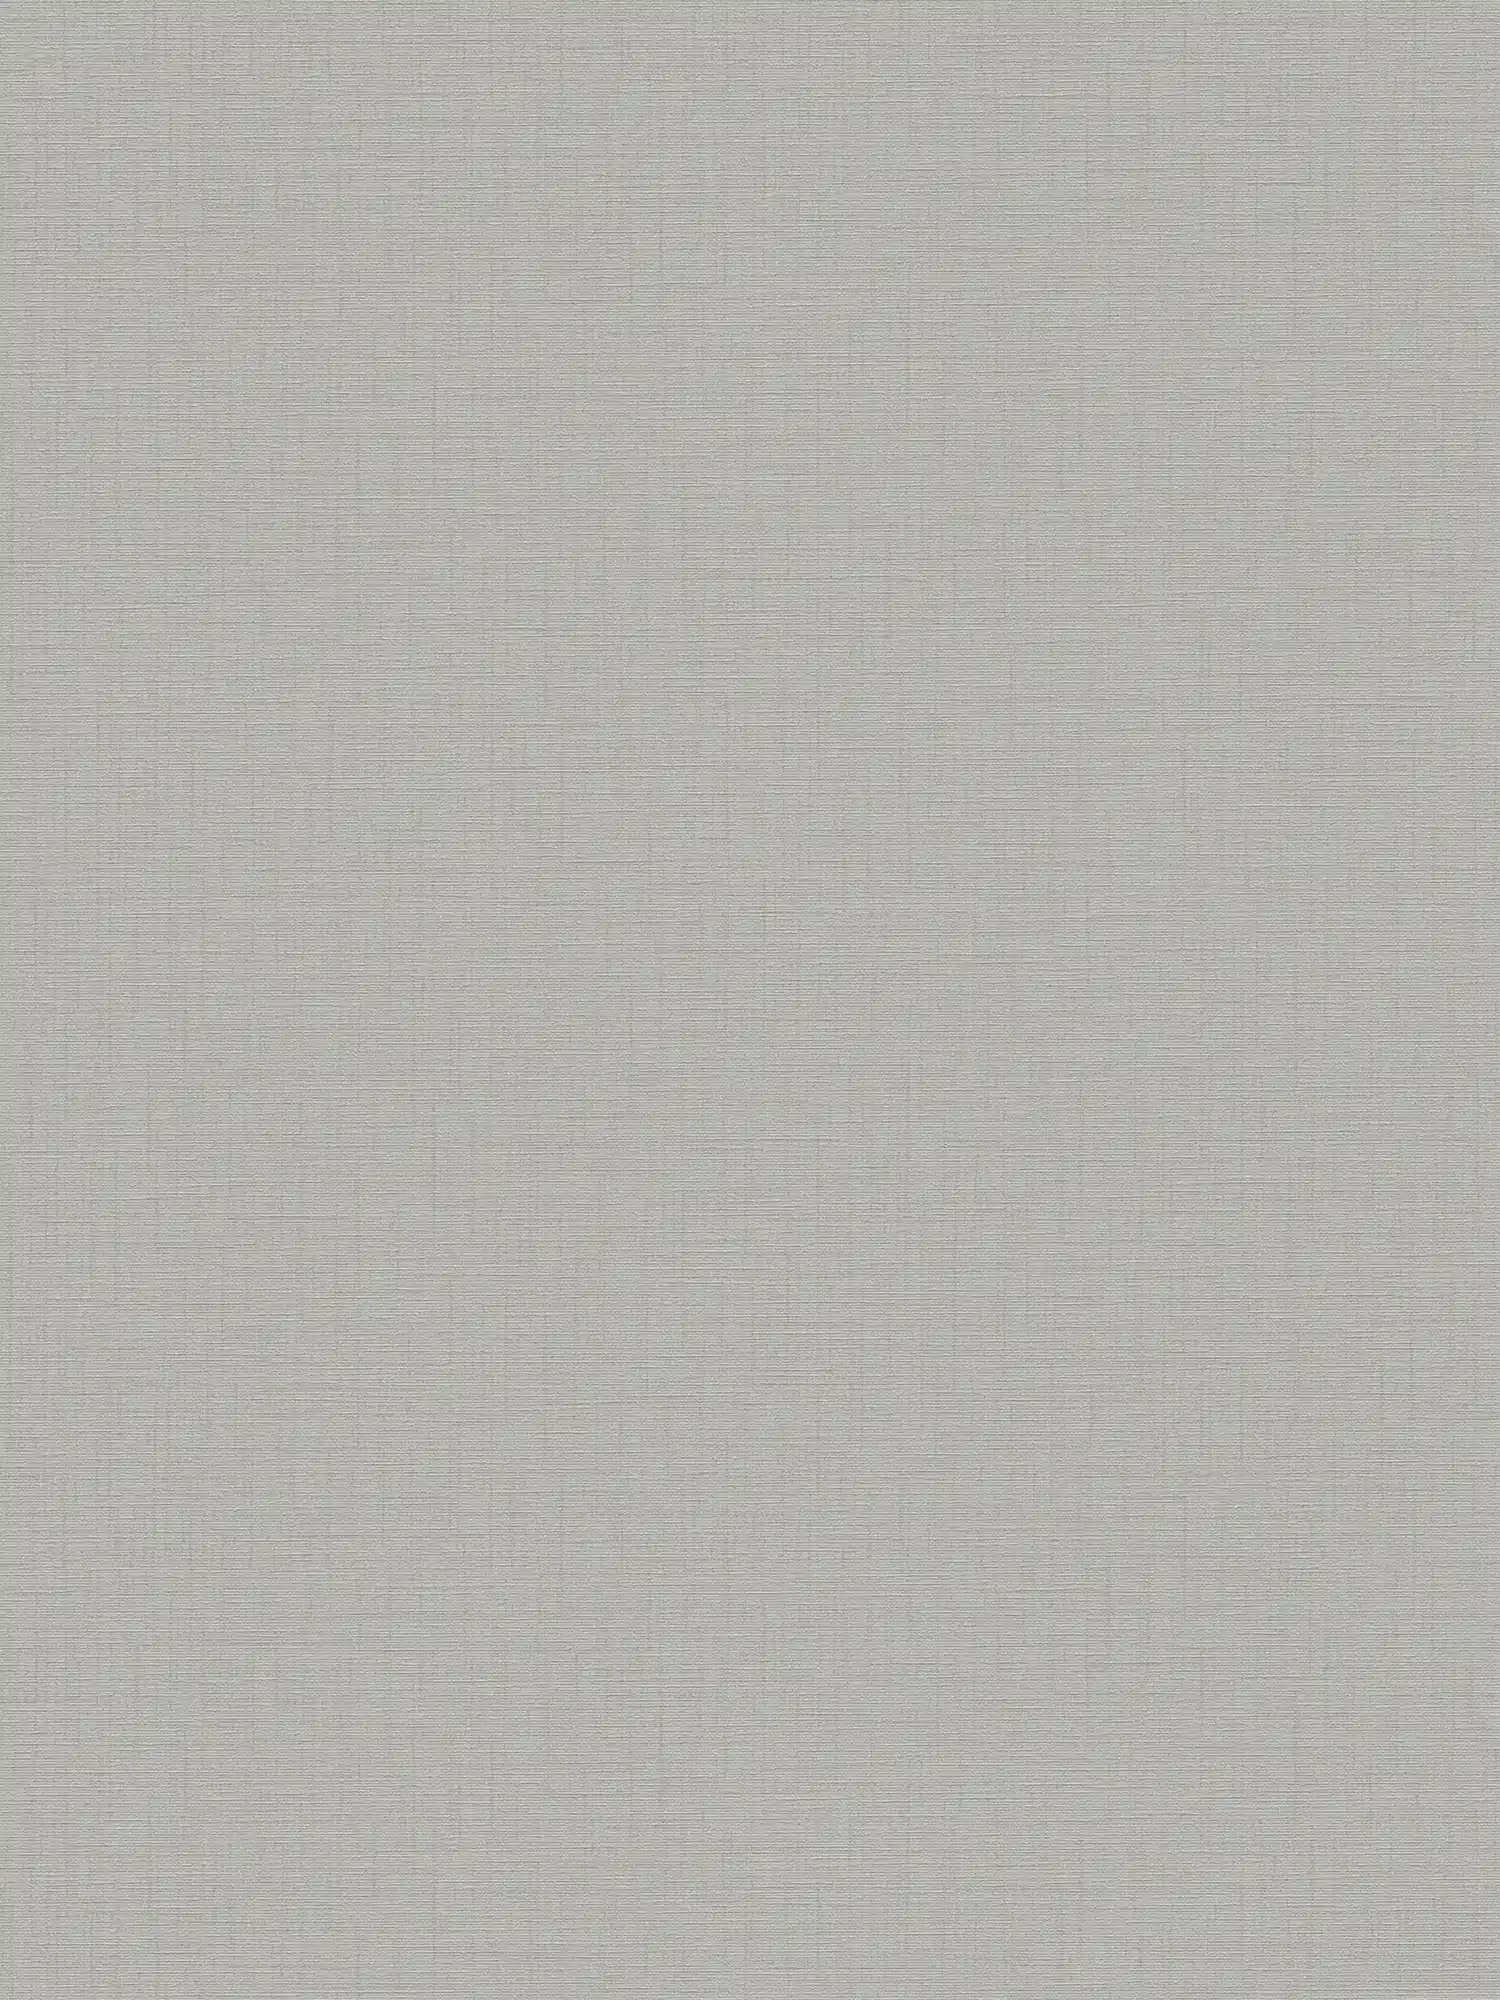 Linen look wallpaper non-woven in light greige - grey
